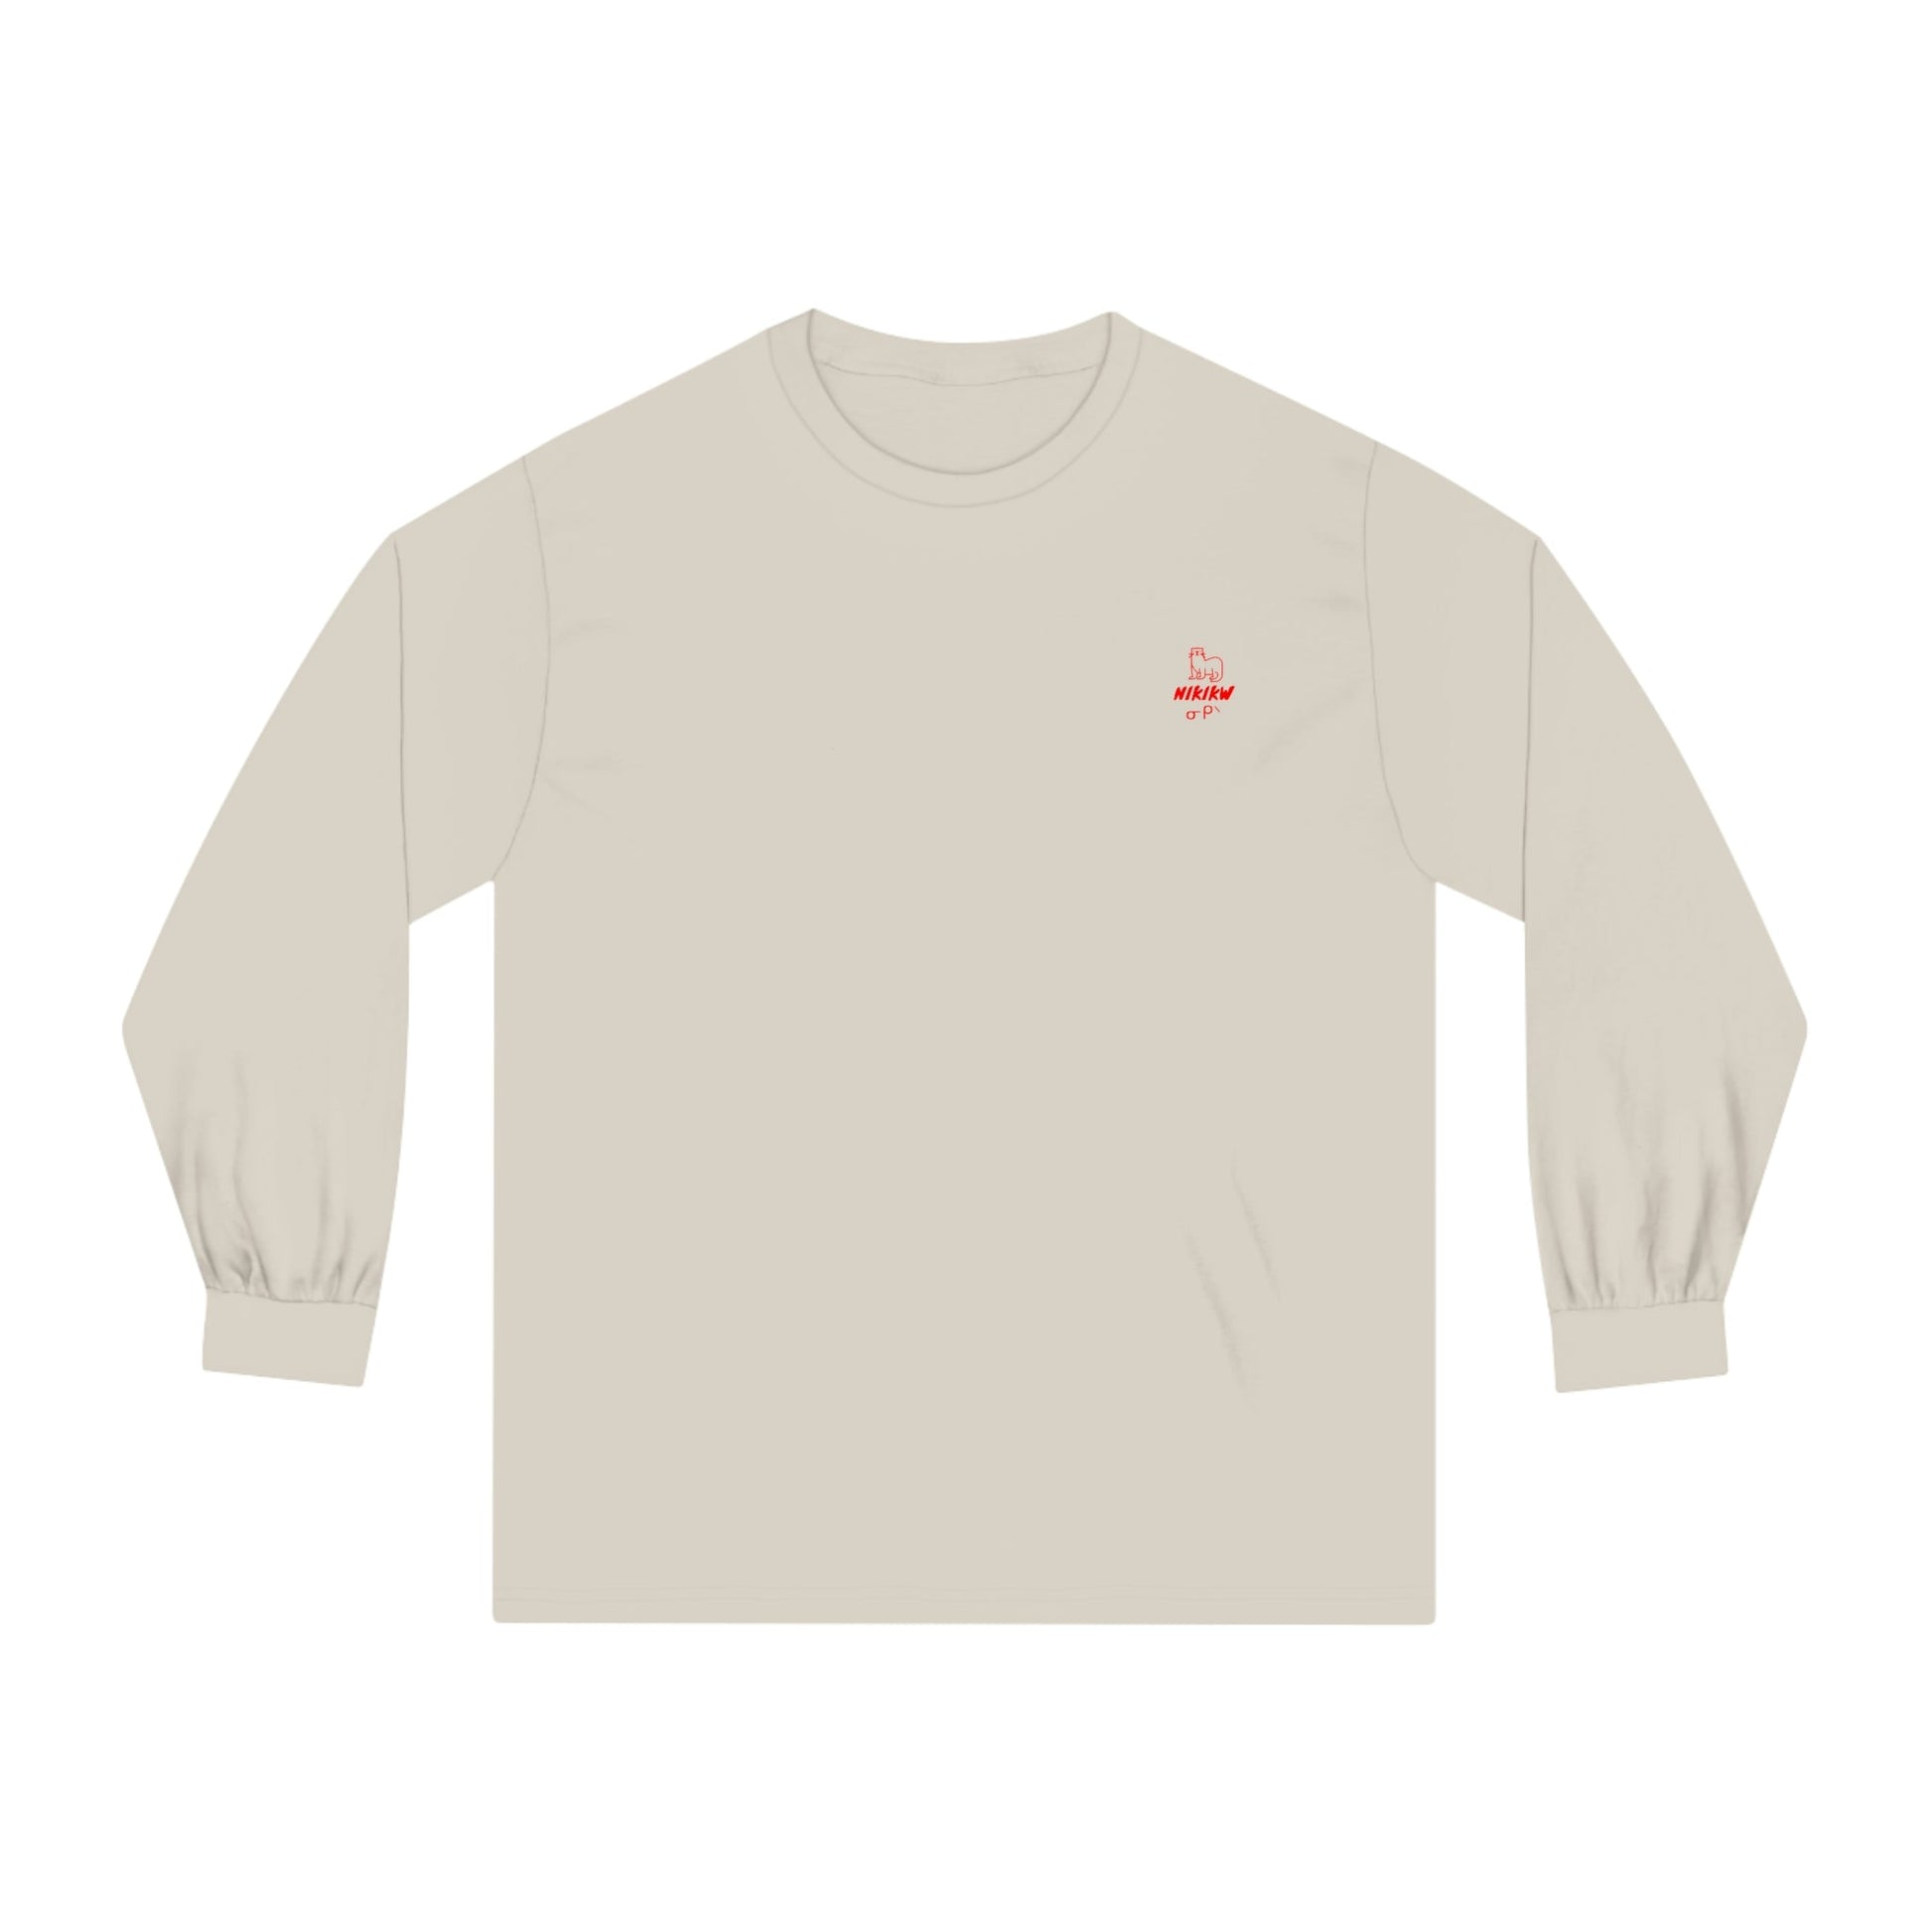 Stoodis Skater Classic Long Sleeve T-Shirt - Nikikw Designs